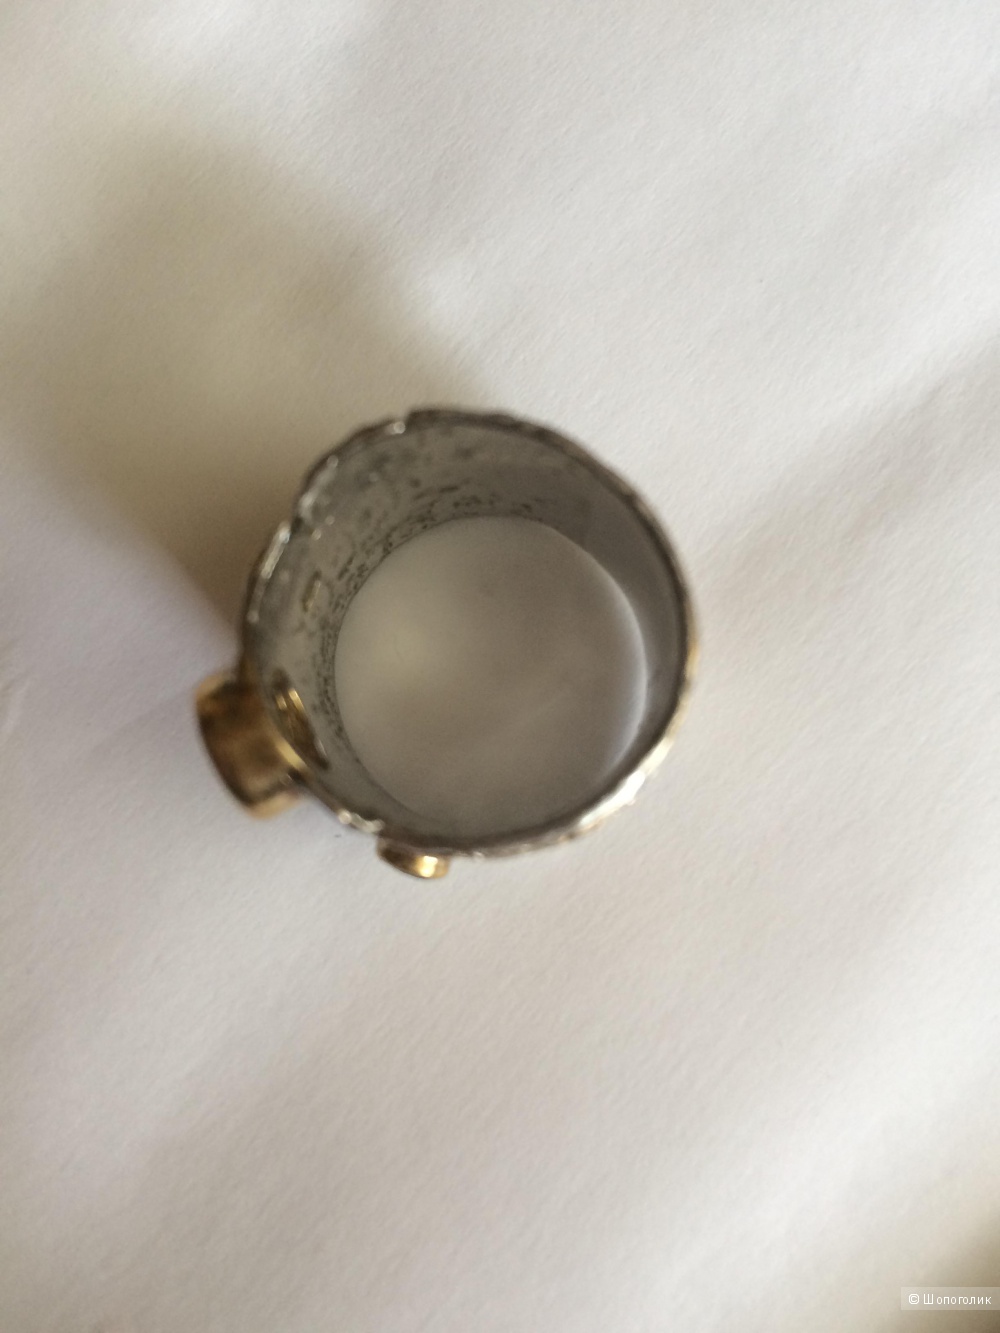 Кольцо G. Kabirski,17,5 размер.